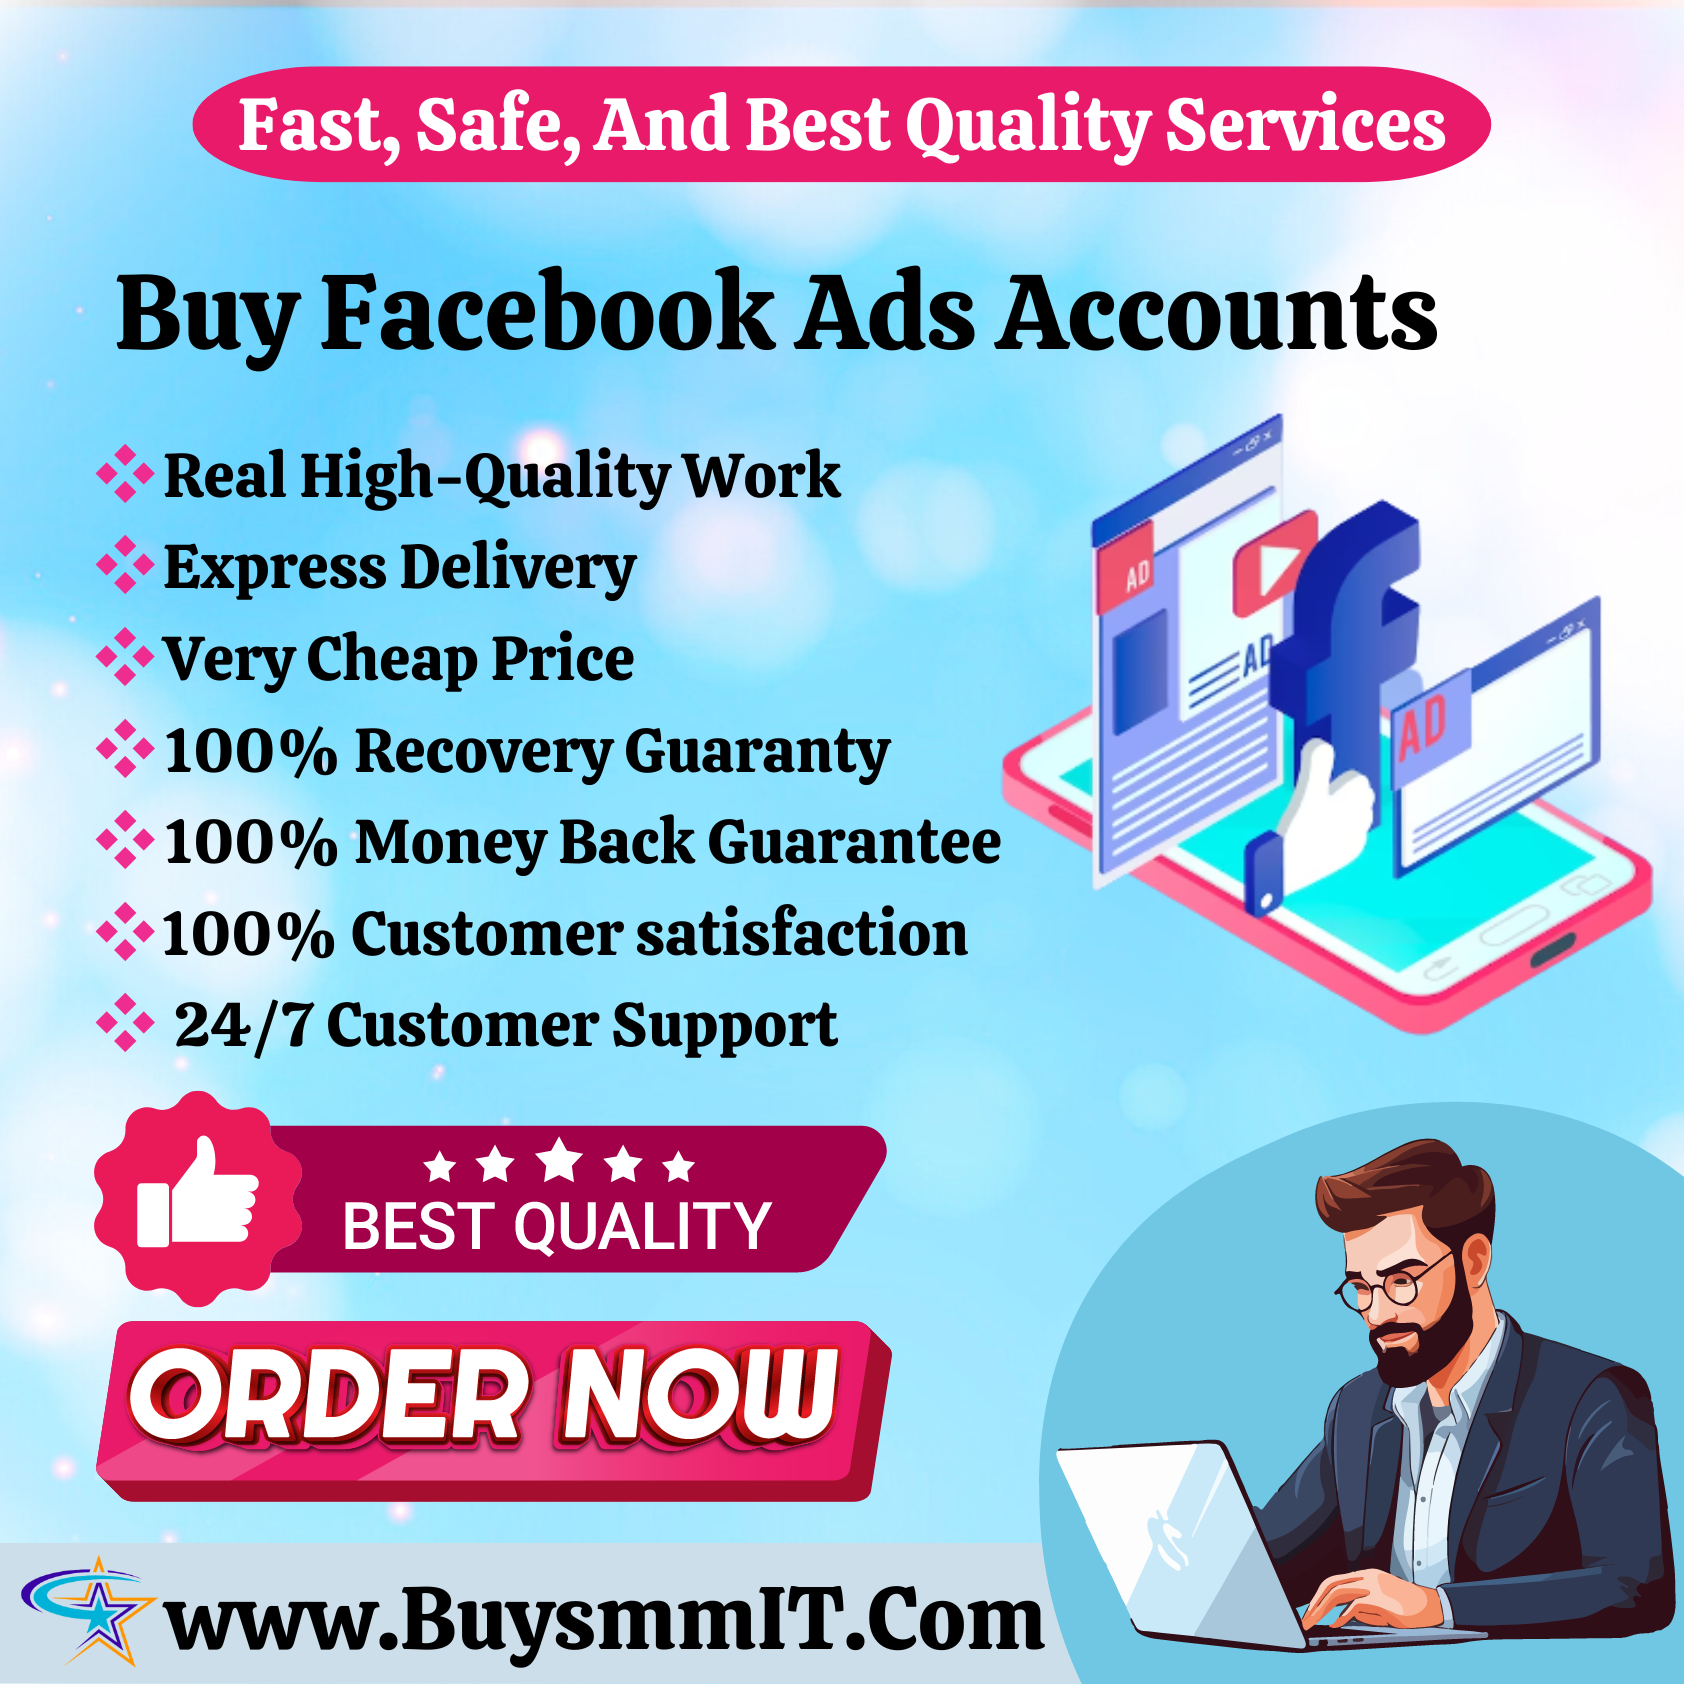 Buy Facebook Ads Accounts - Get 100% Verified FB Accounts